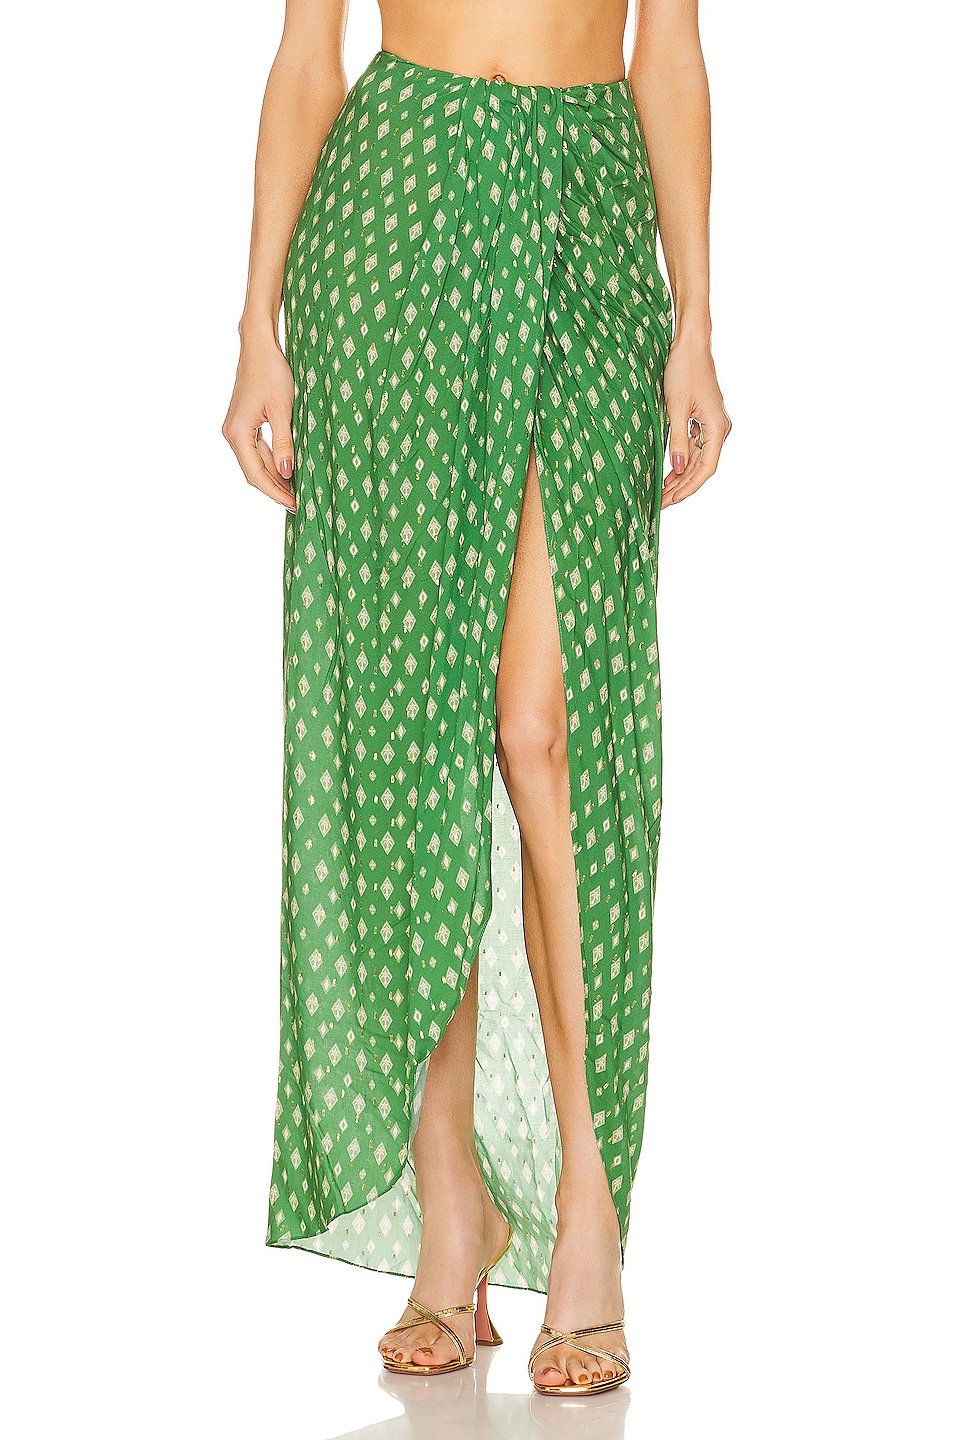 Image 1 of Johanna Ortiz Merecumbe Maxi Skirt in Tieprint Emerald, Green, & Peach